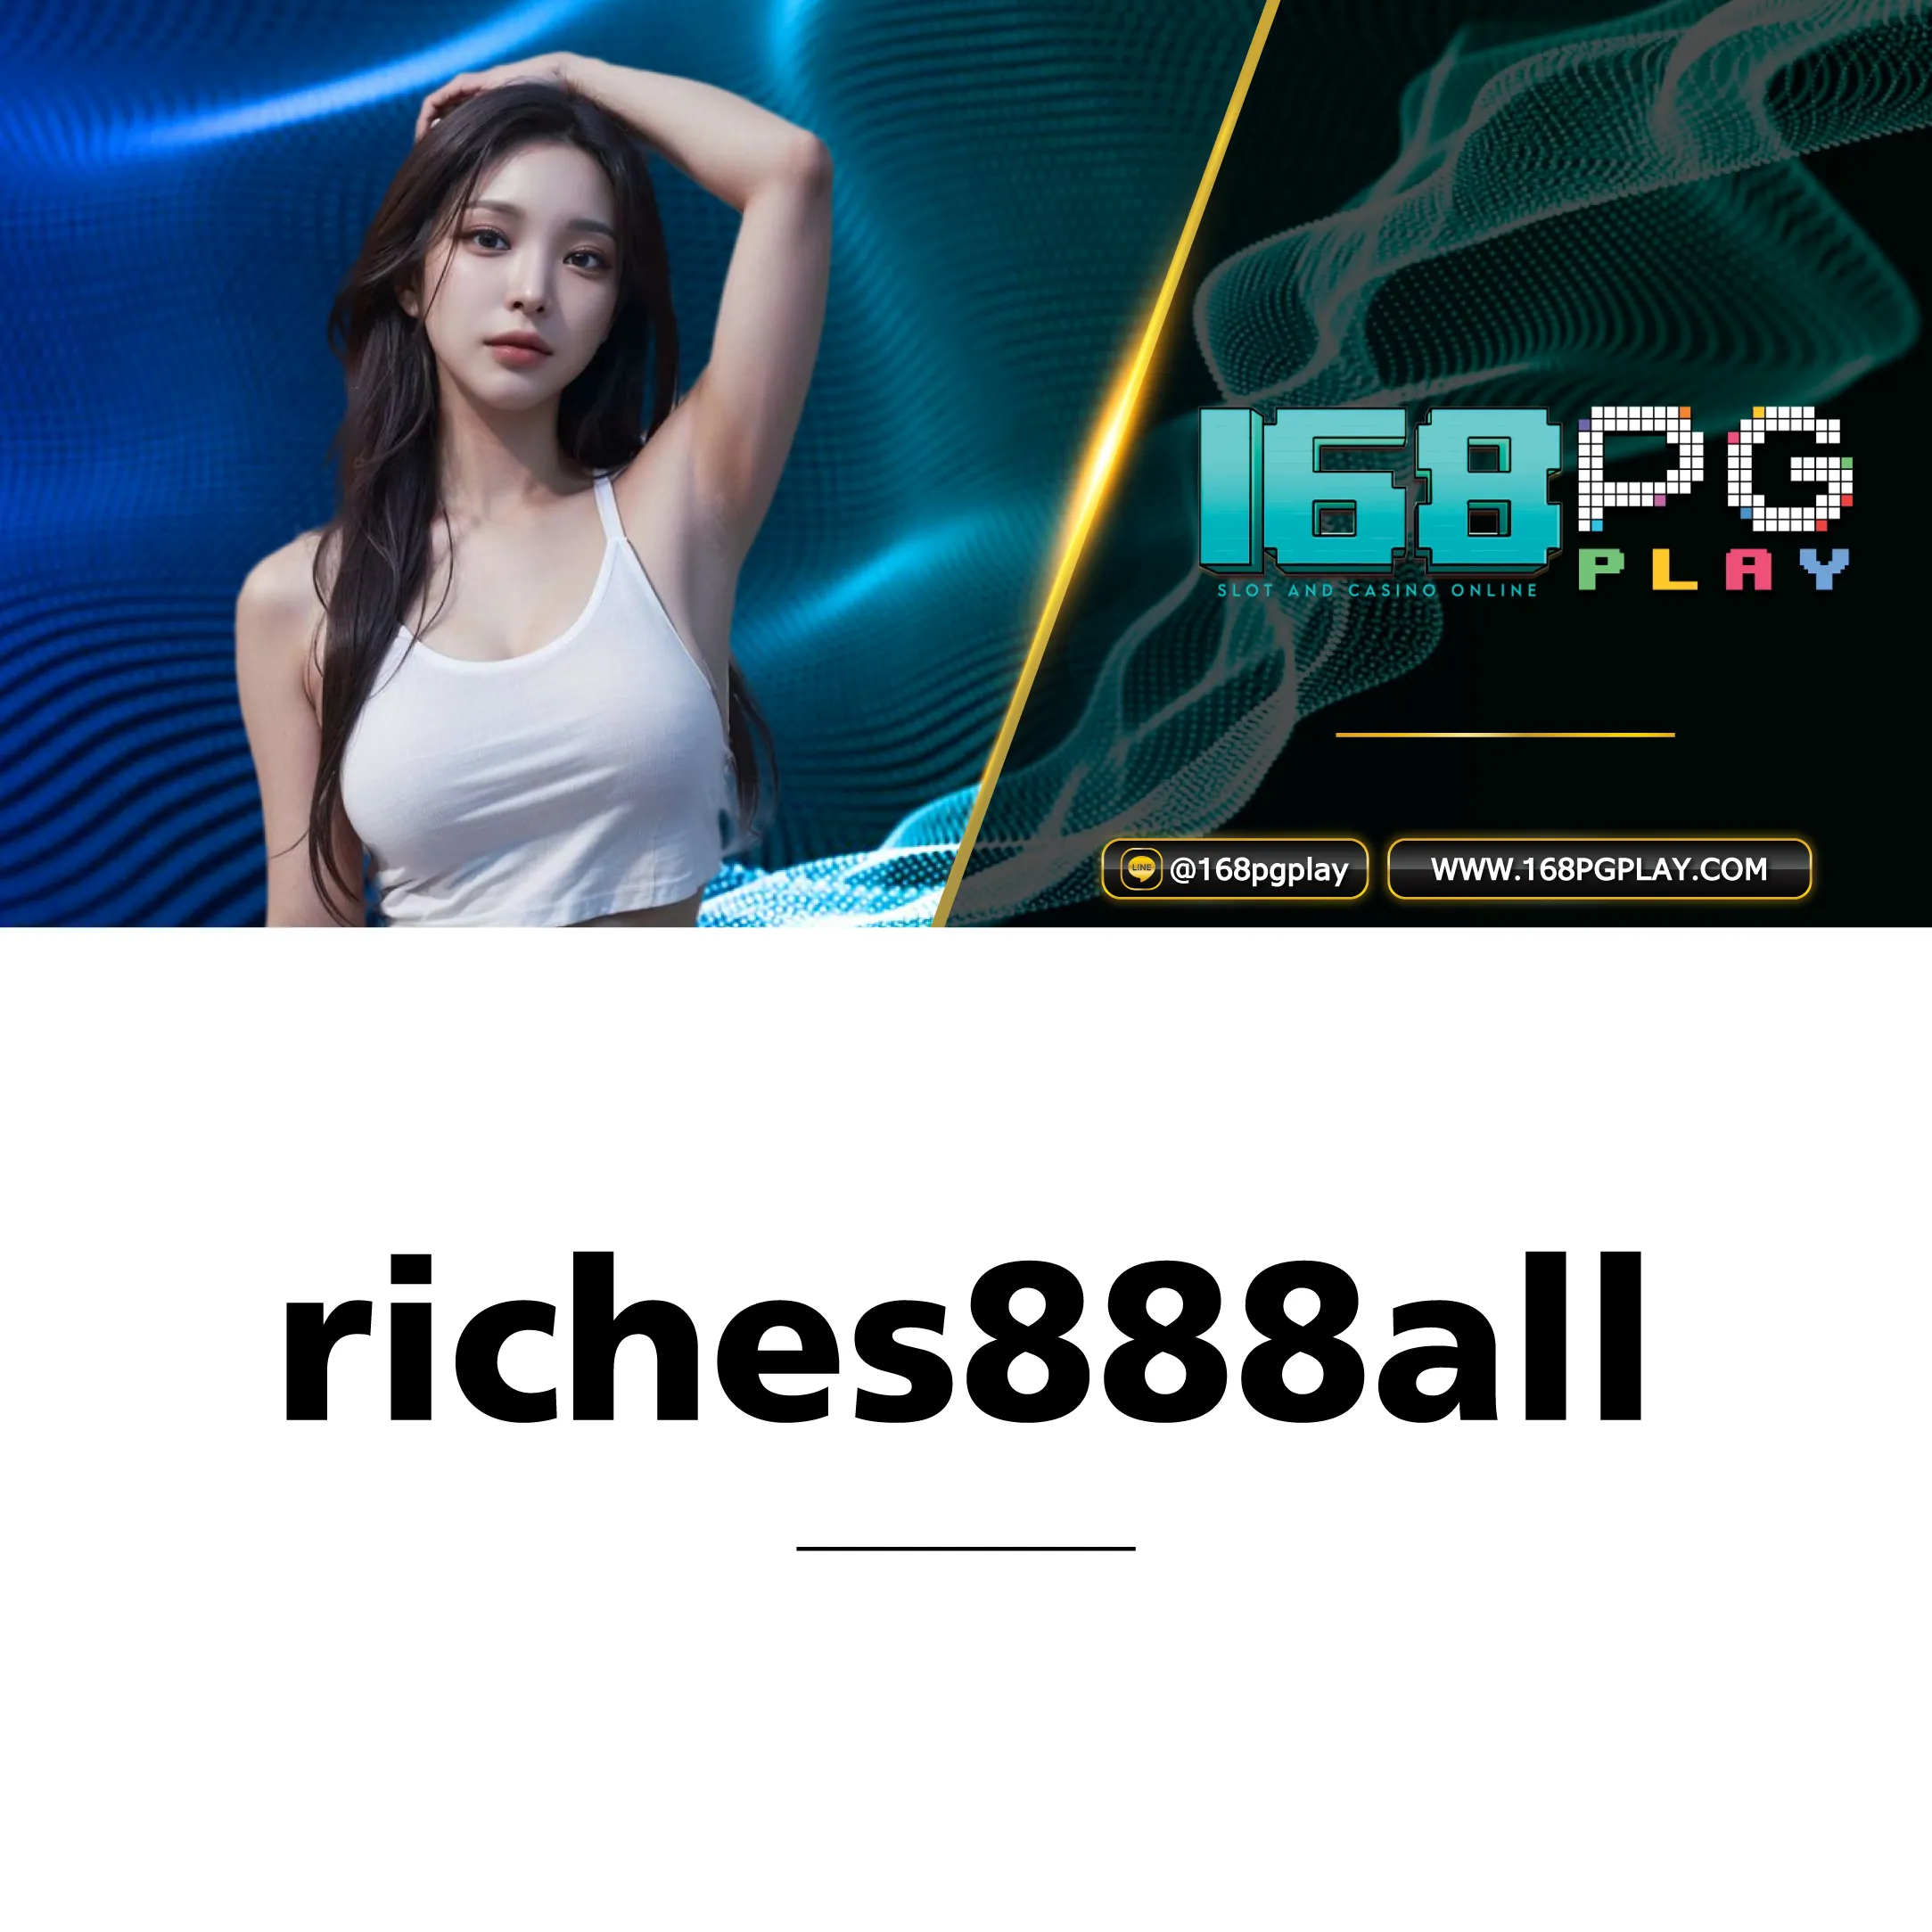 riches888all